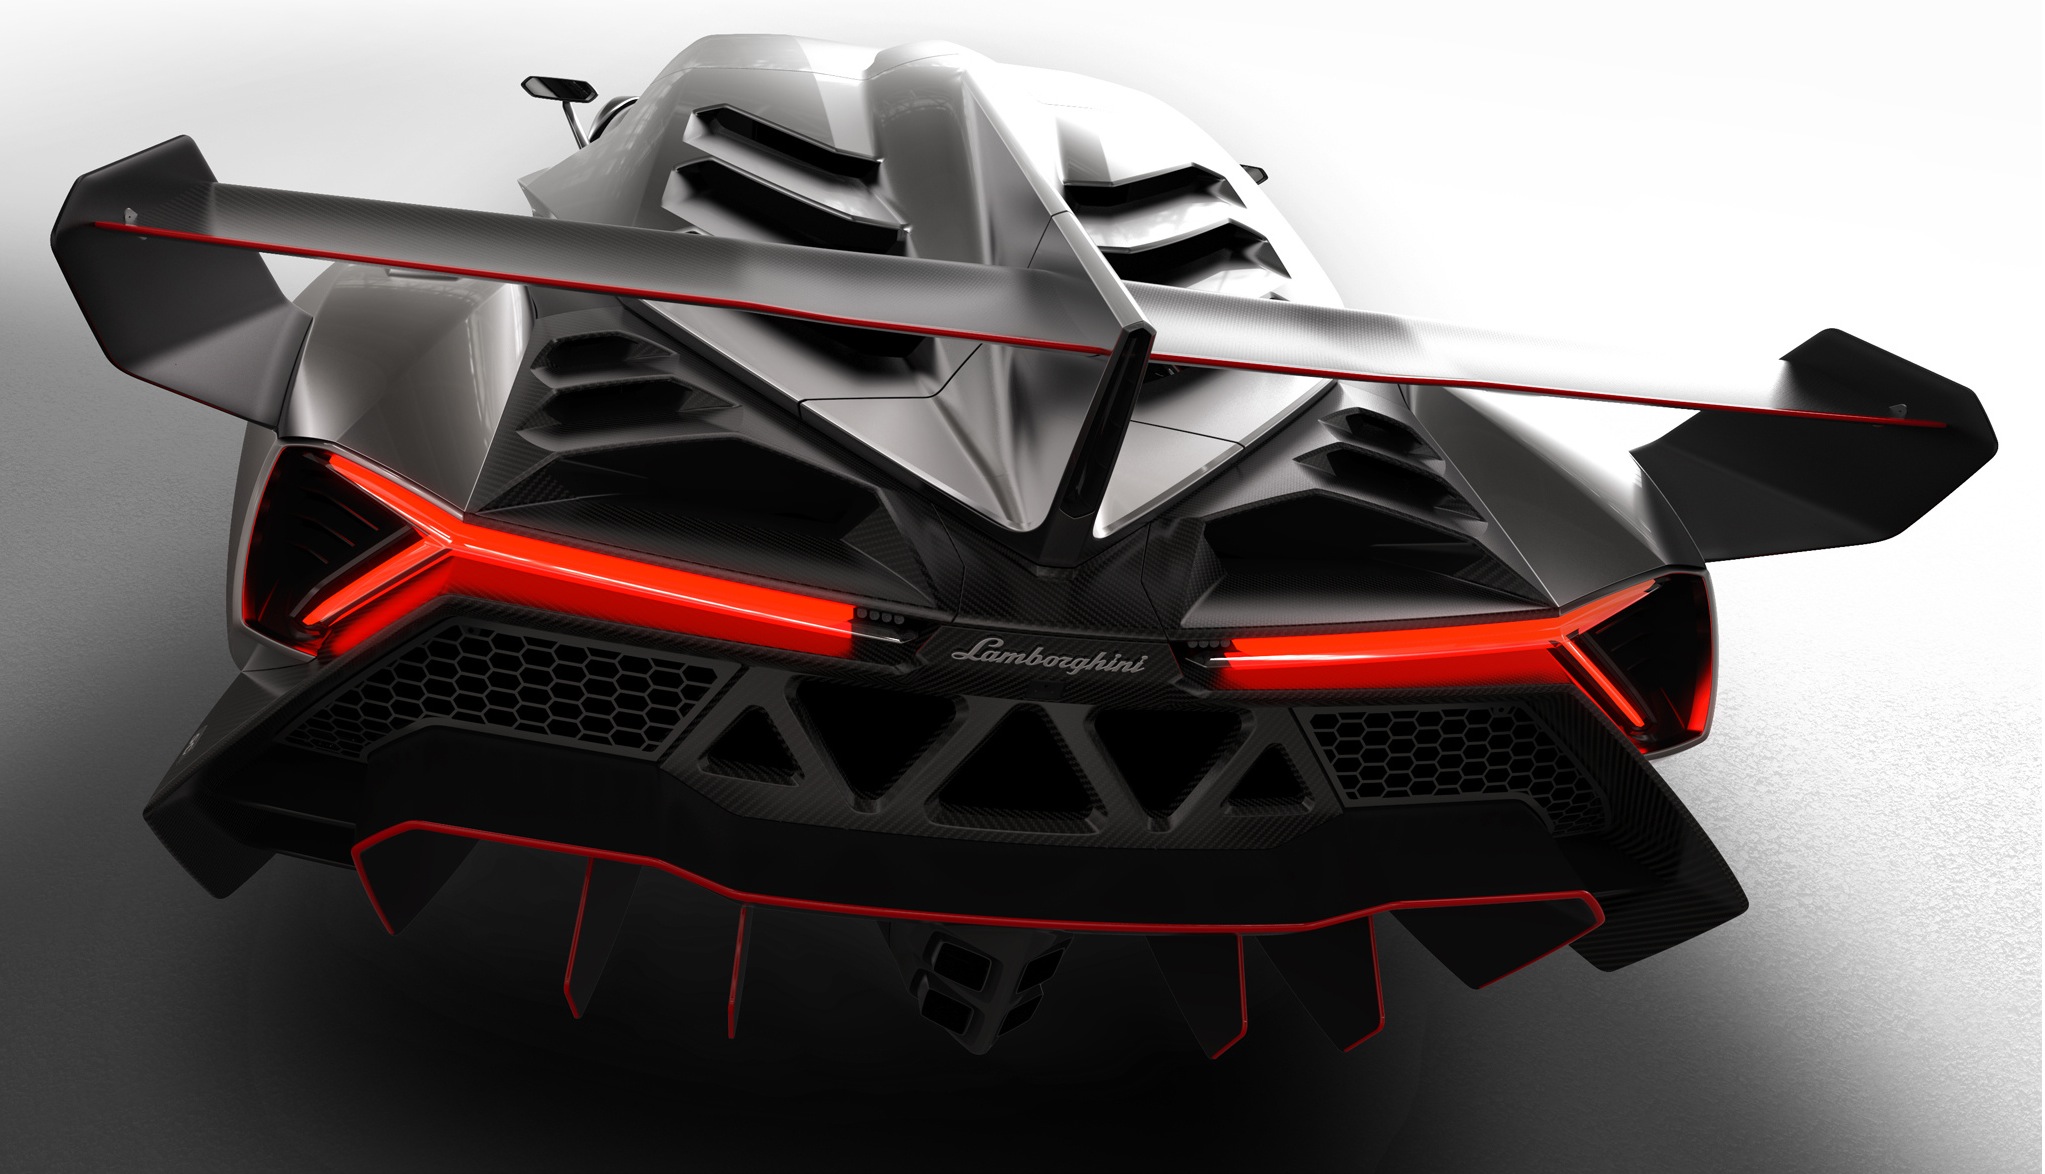 Lamborghini Rat Rod http://www.fast-autos.net/vehicles/Lamborghini/2015/Veneno/lamborghini-veneno-004.jpg